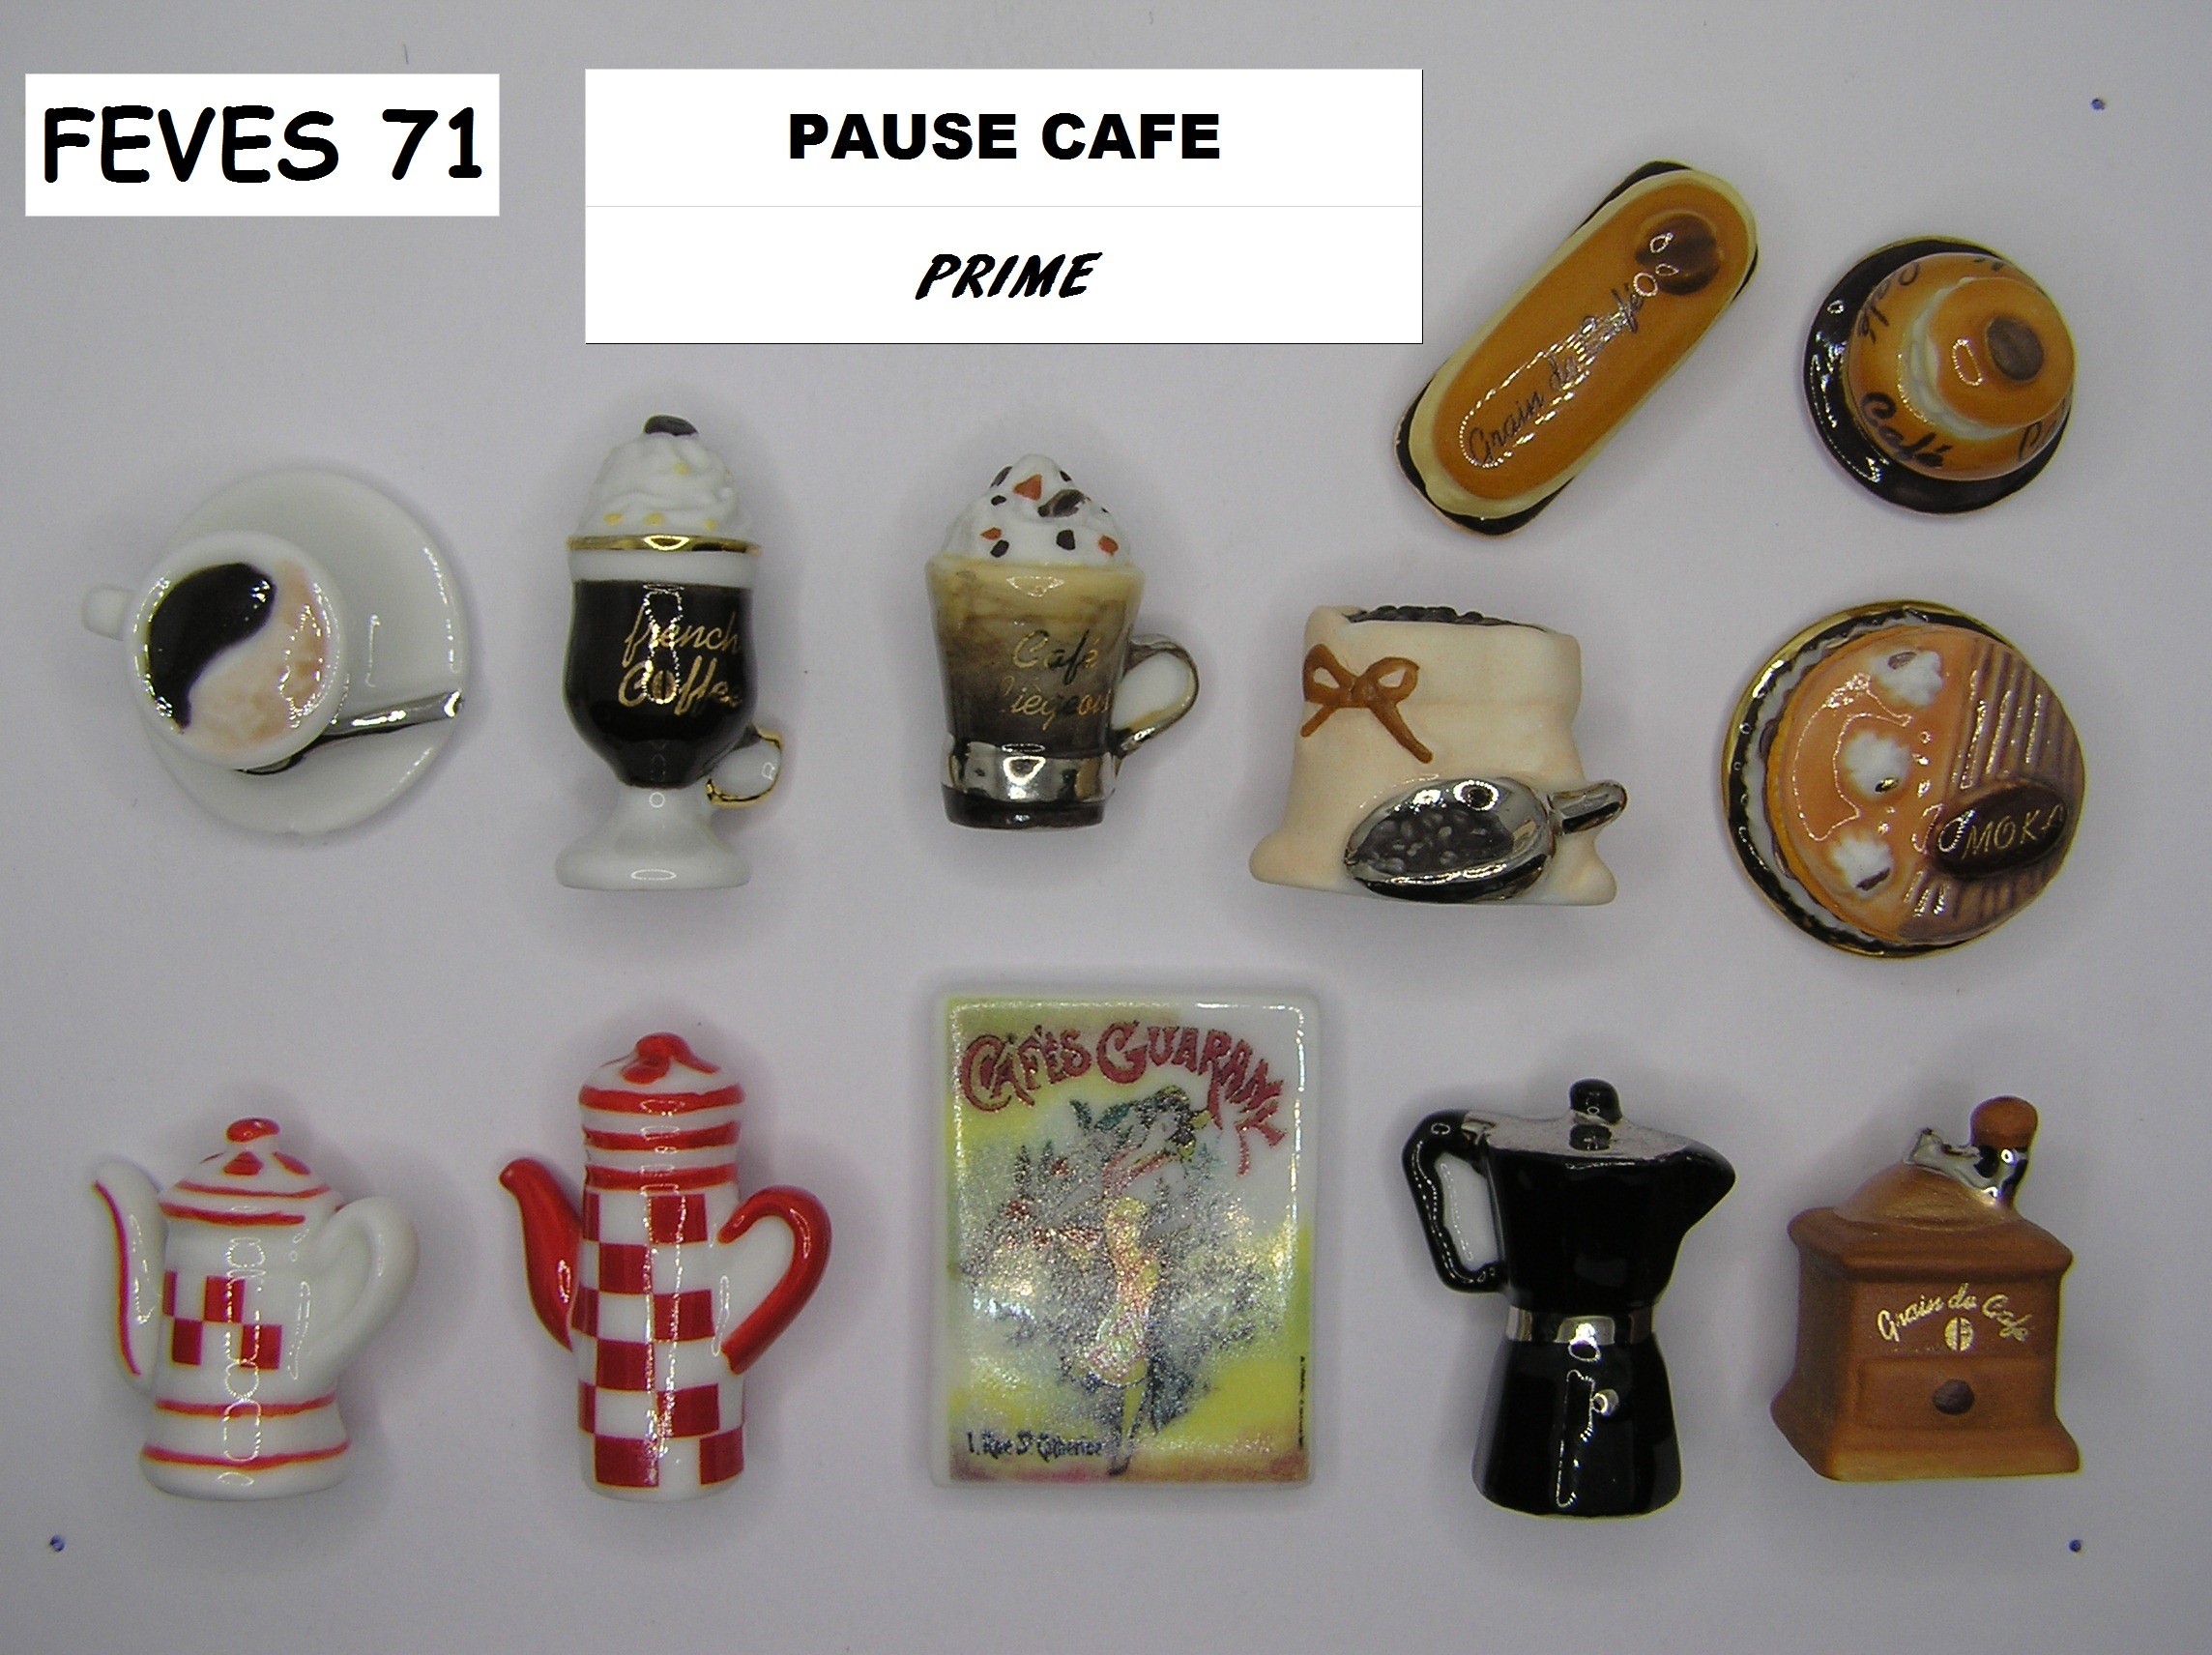 E 49 / PAUSE CAFE / épuisée / PRIME / AFF 84.2020